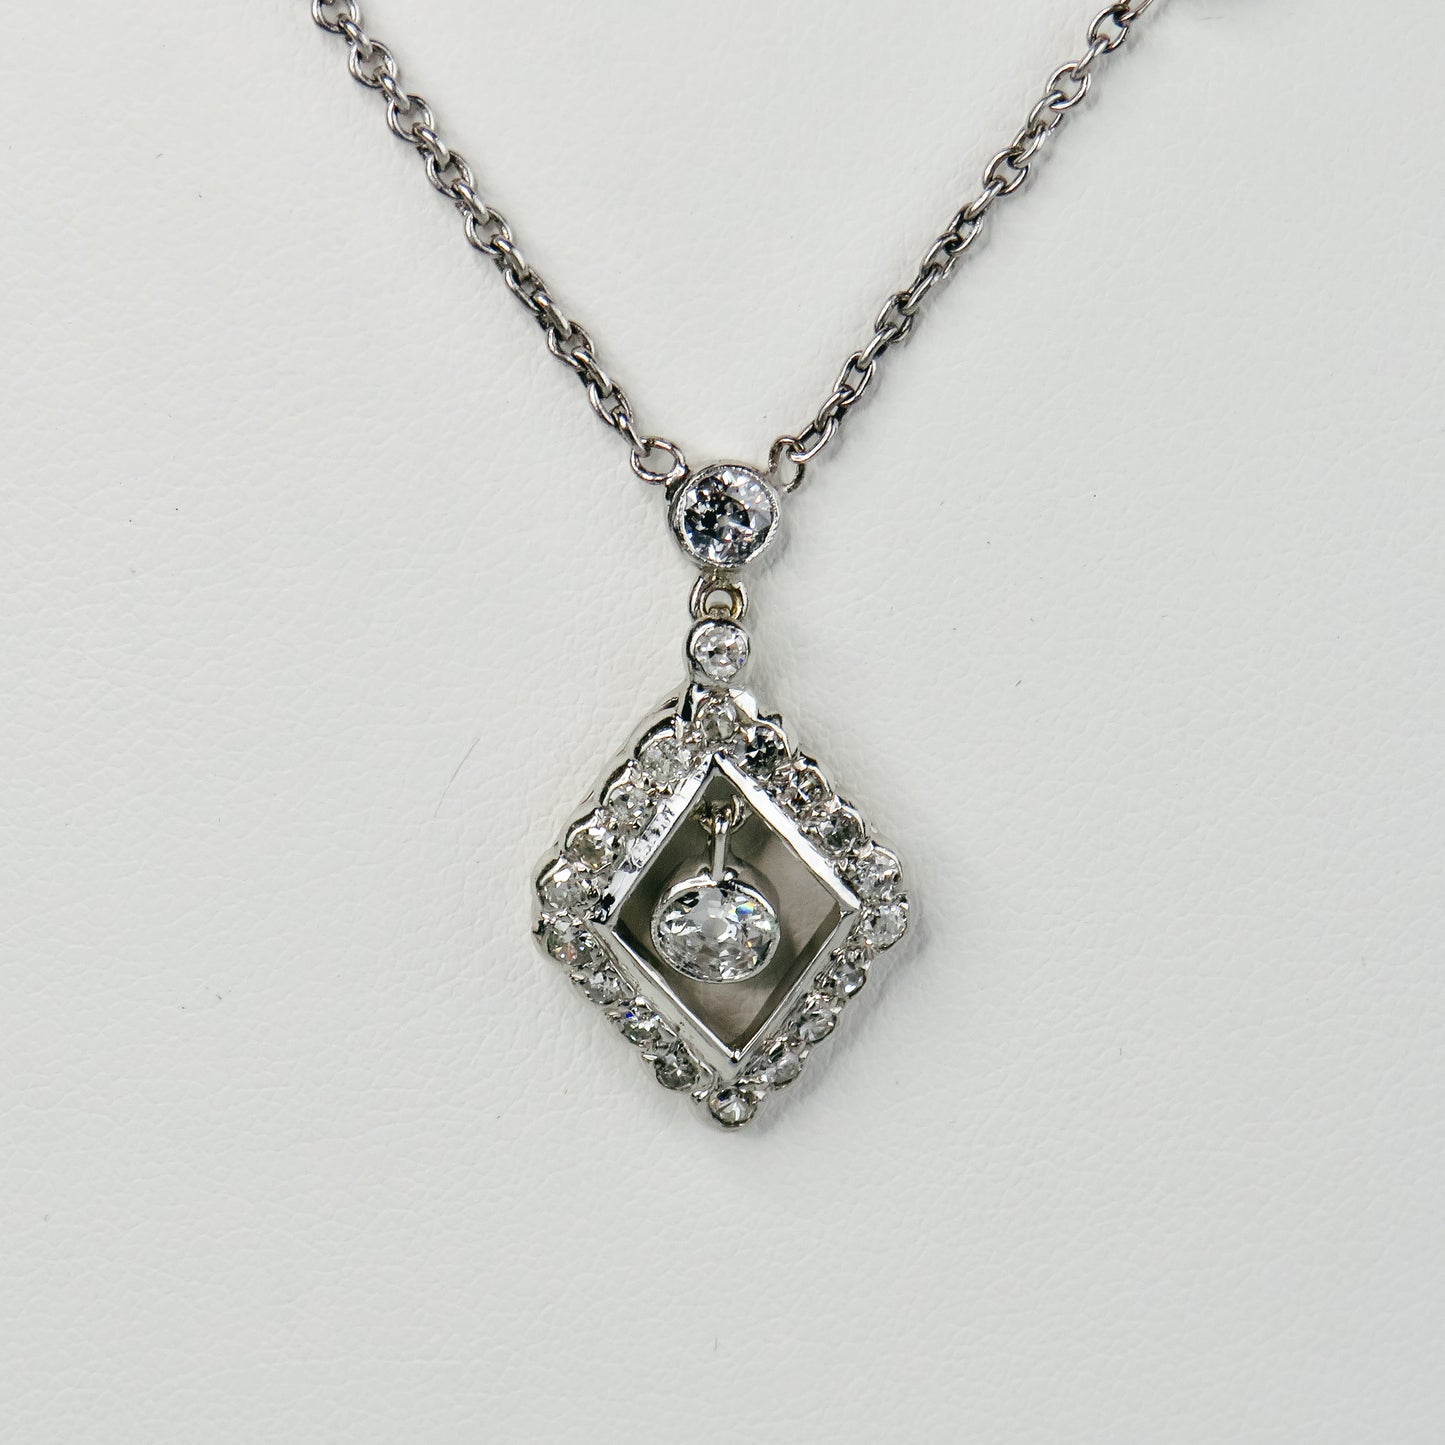 Art Deco Diamant chain made of white gold